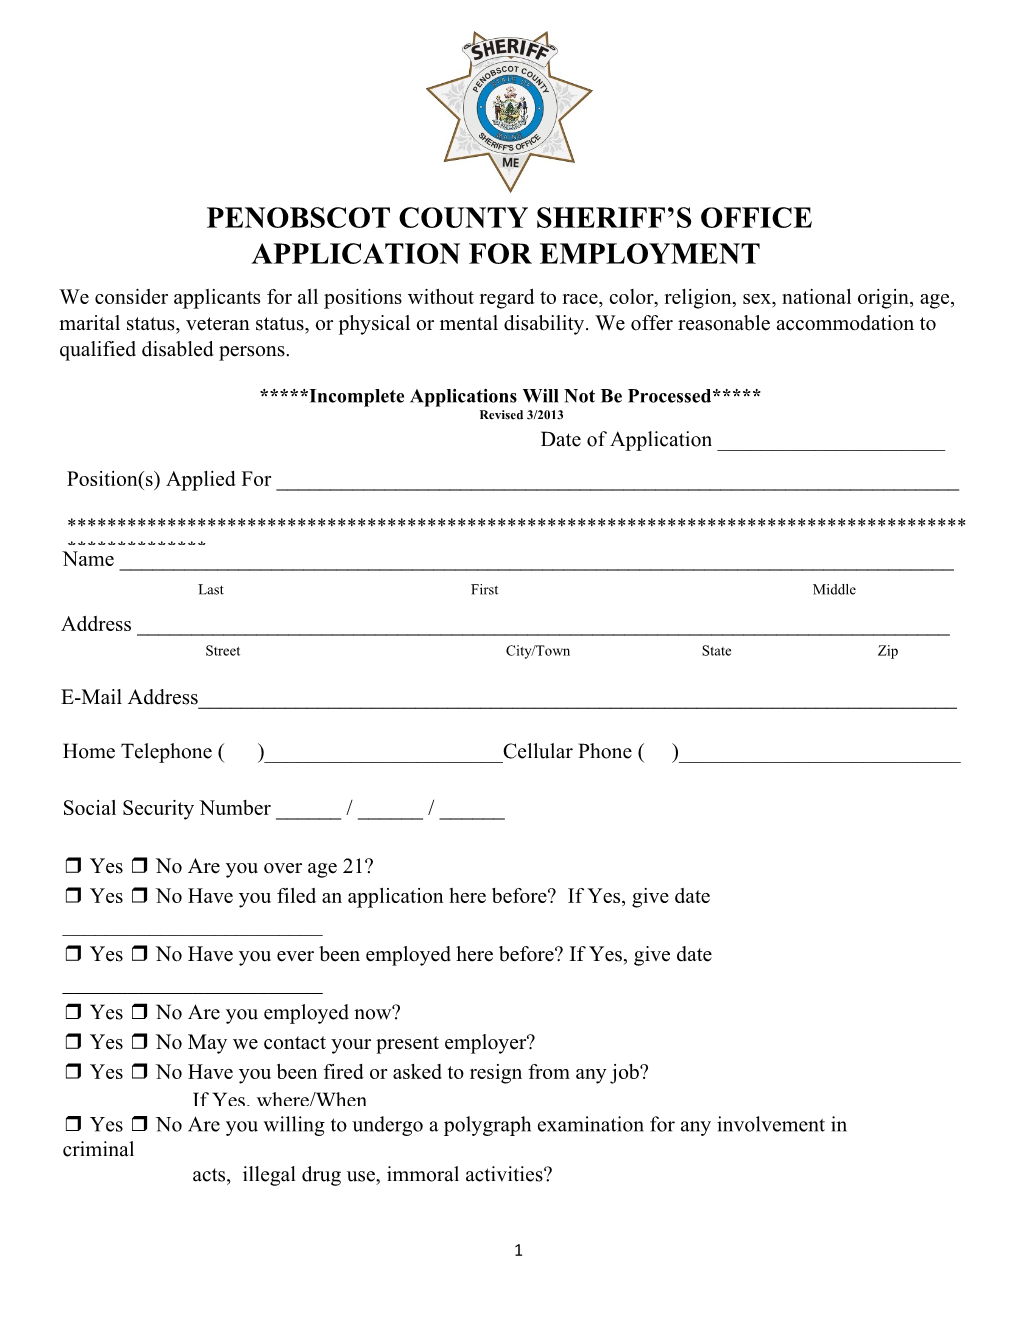 Penobscot County Sheriff Employment App.Pmd